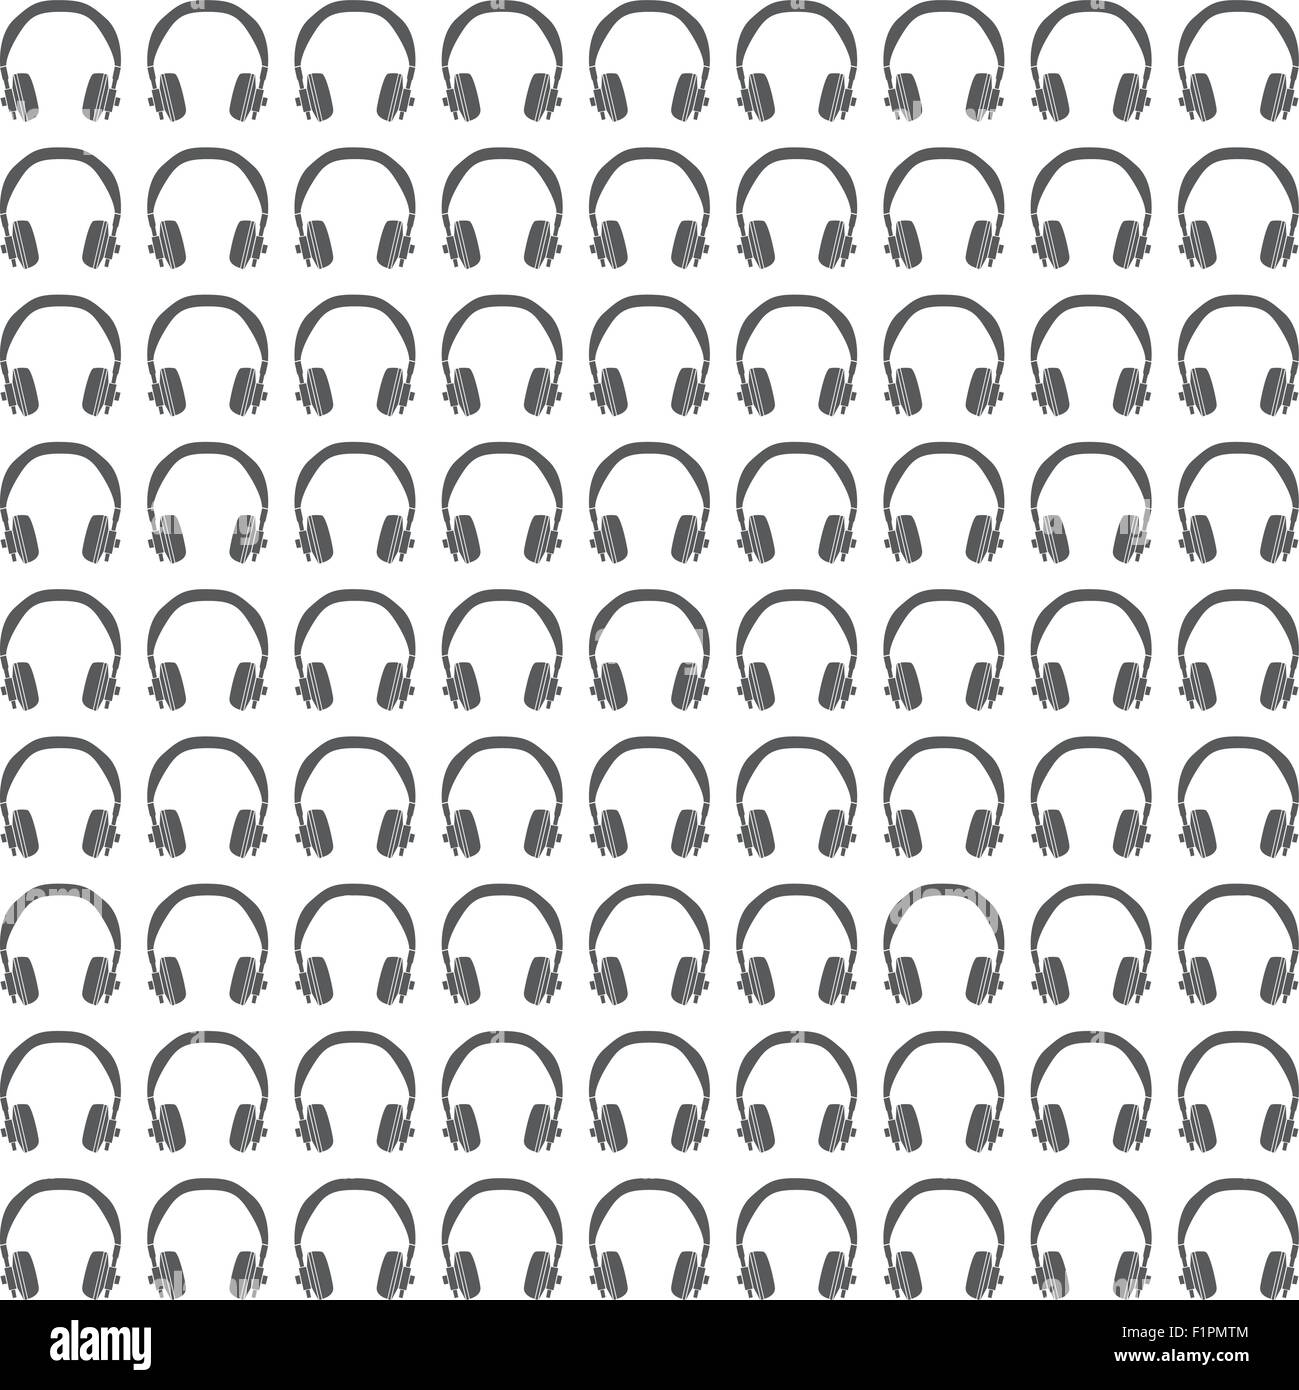 Headphones Seamless Pattern in Black & White Vector illustration Stock Vector